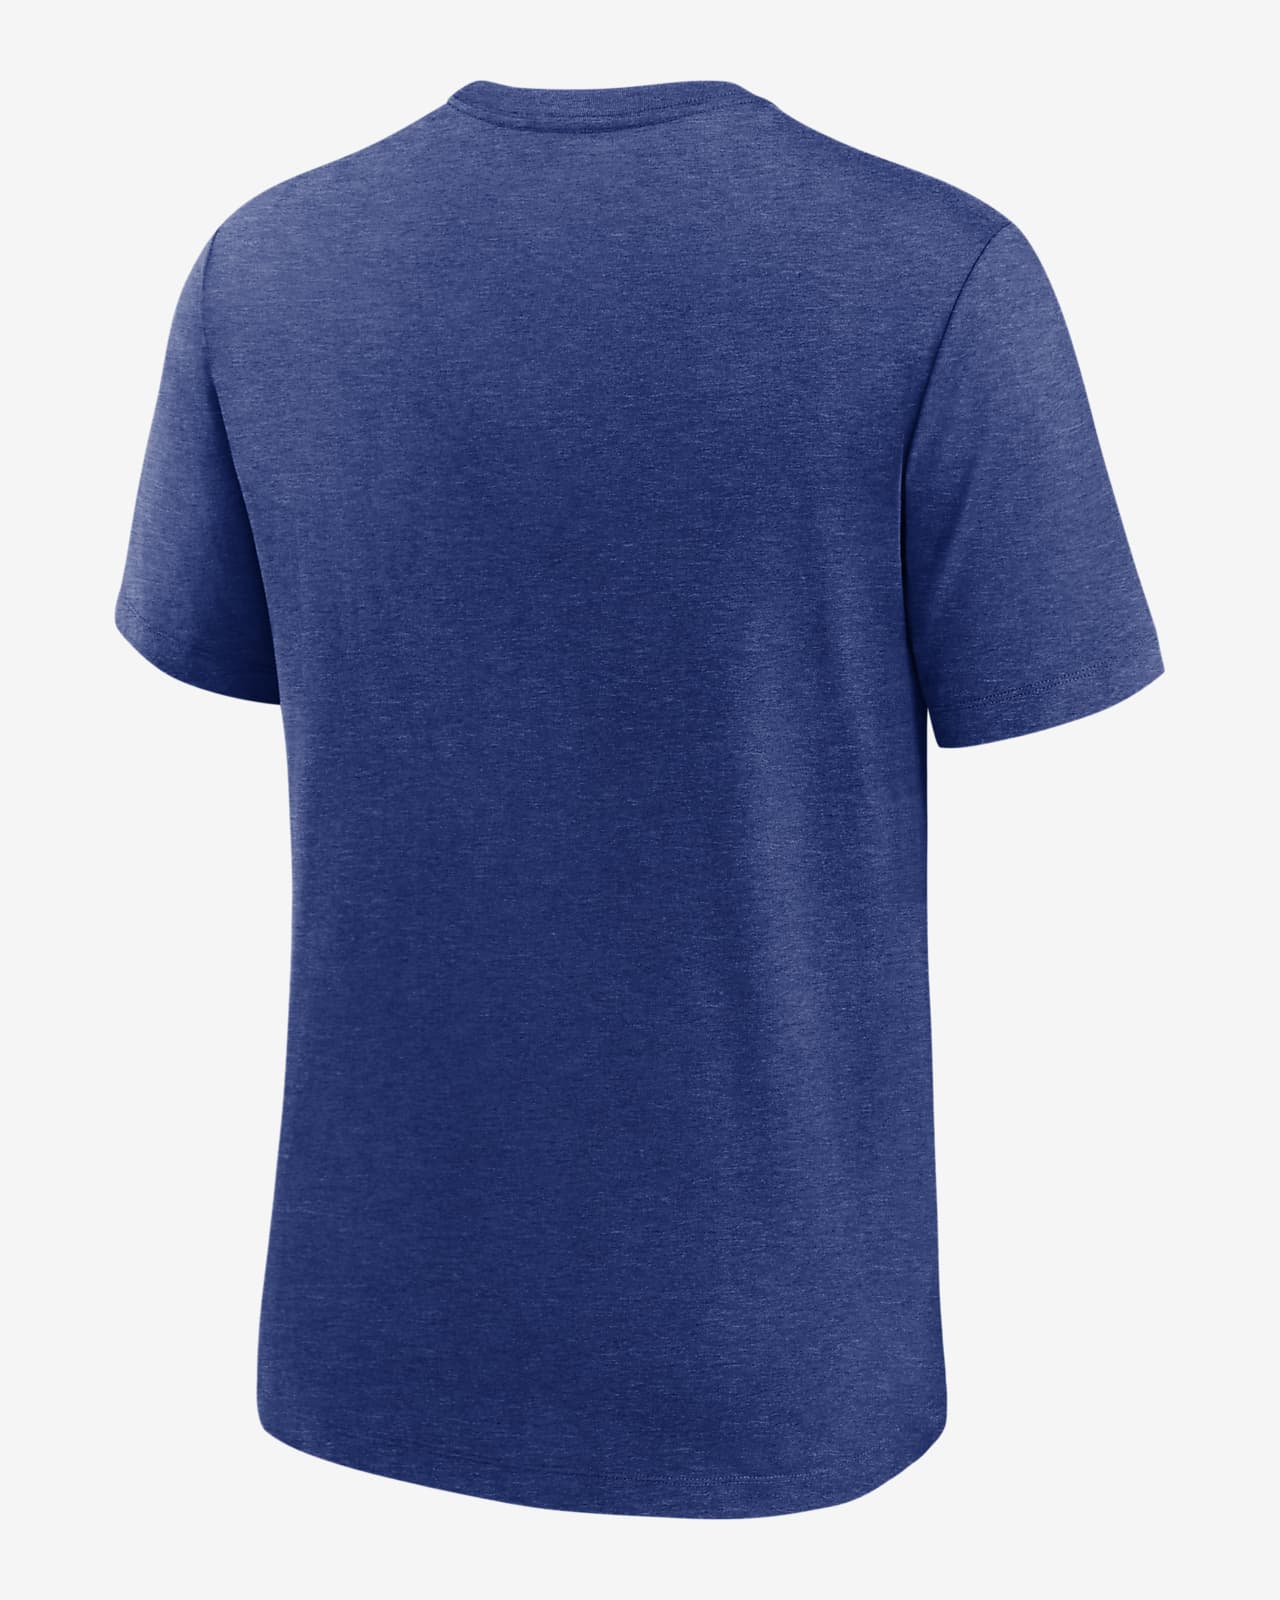 Nike Dri-FIT Early Work (MLB Toronto Blue Jays) Men's T-Shirt.